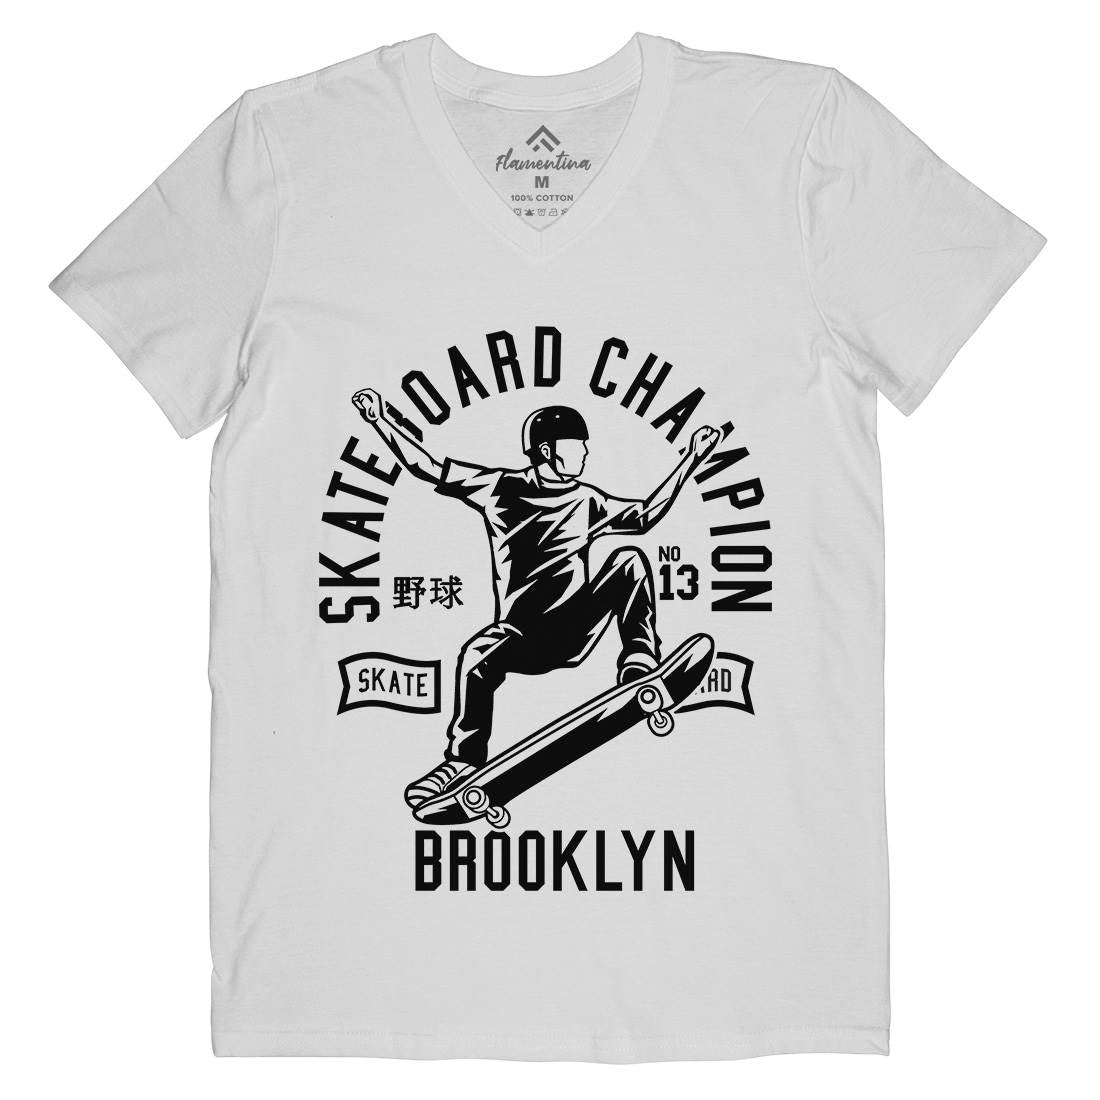 Skateboard Champion Mens Organic V-Neck T-Shirt Skate B622